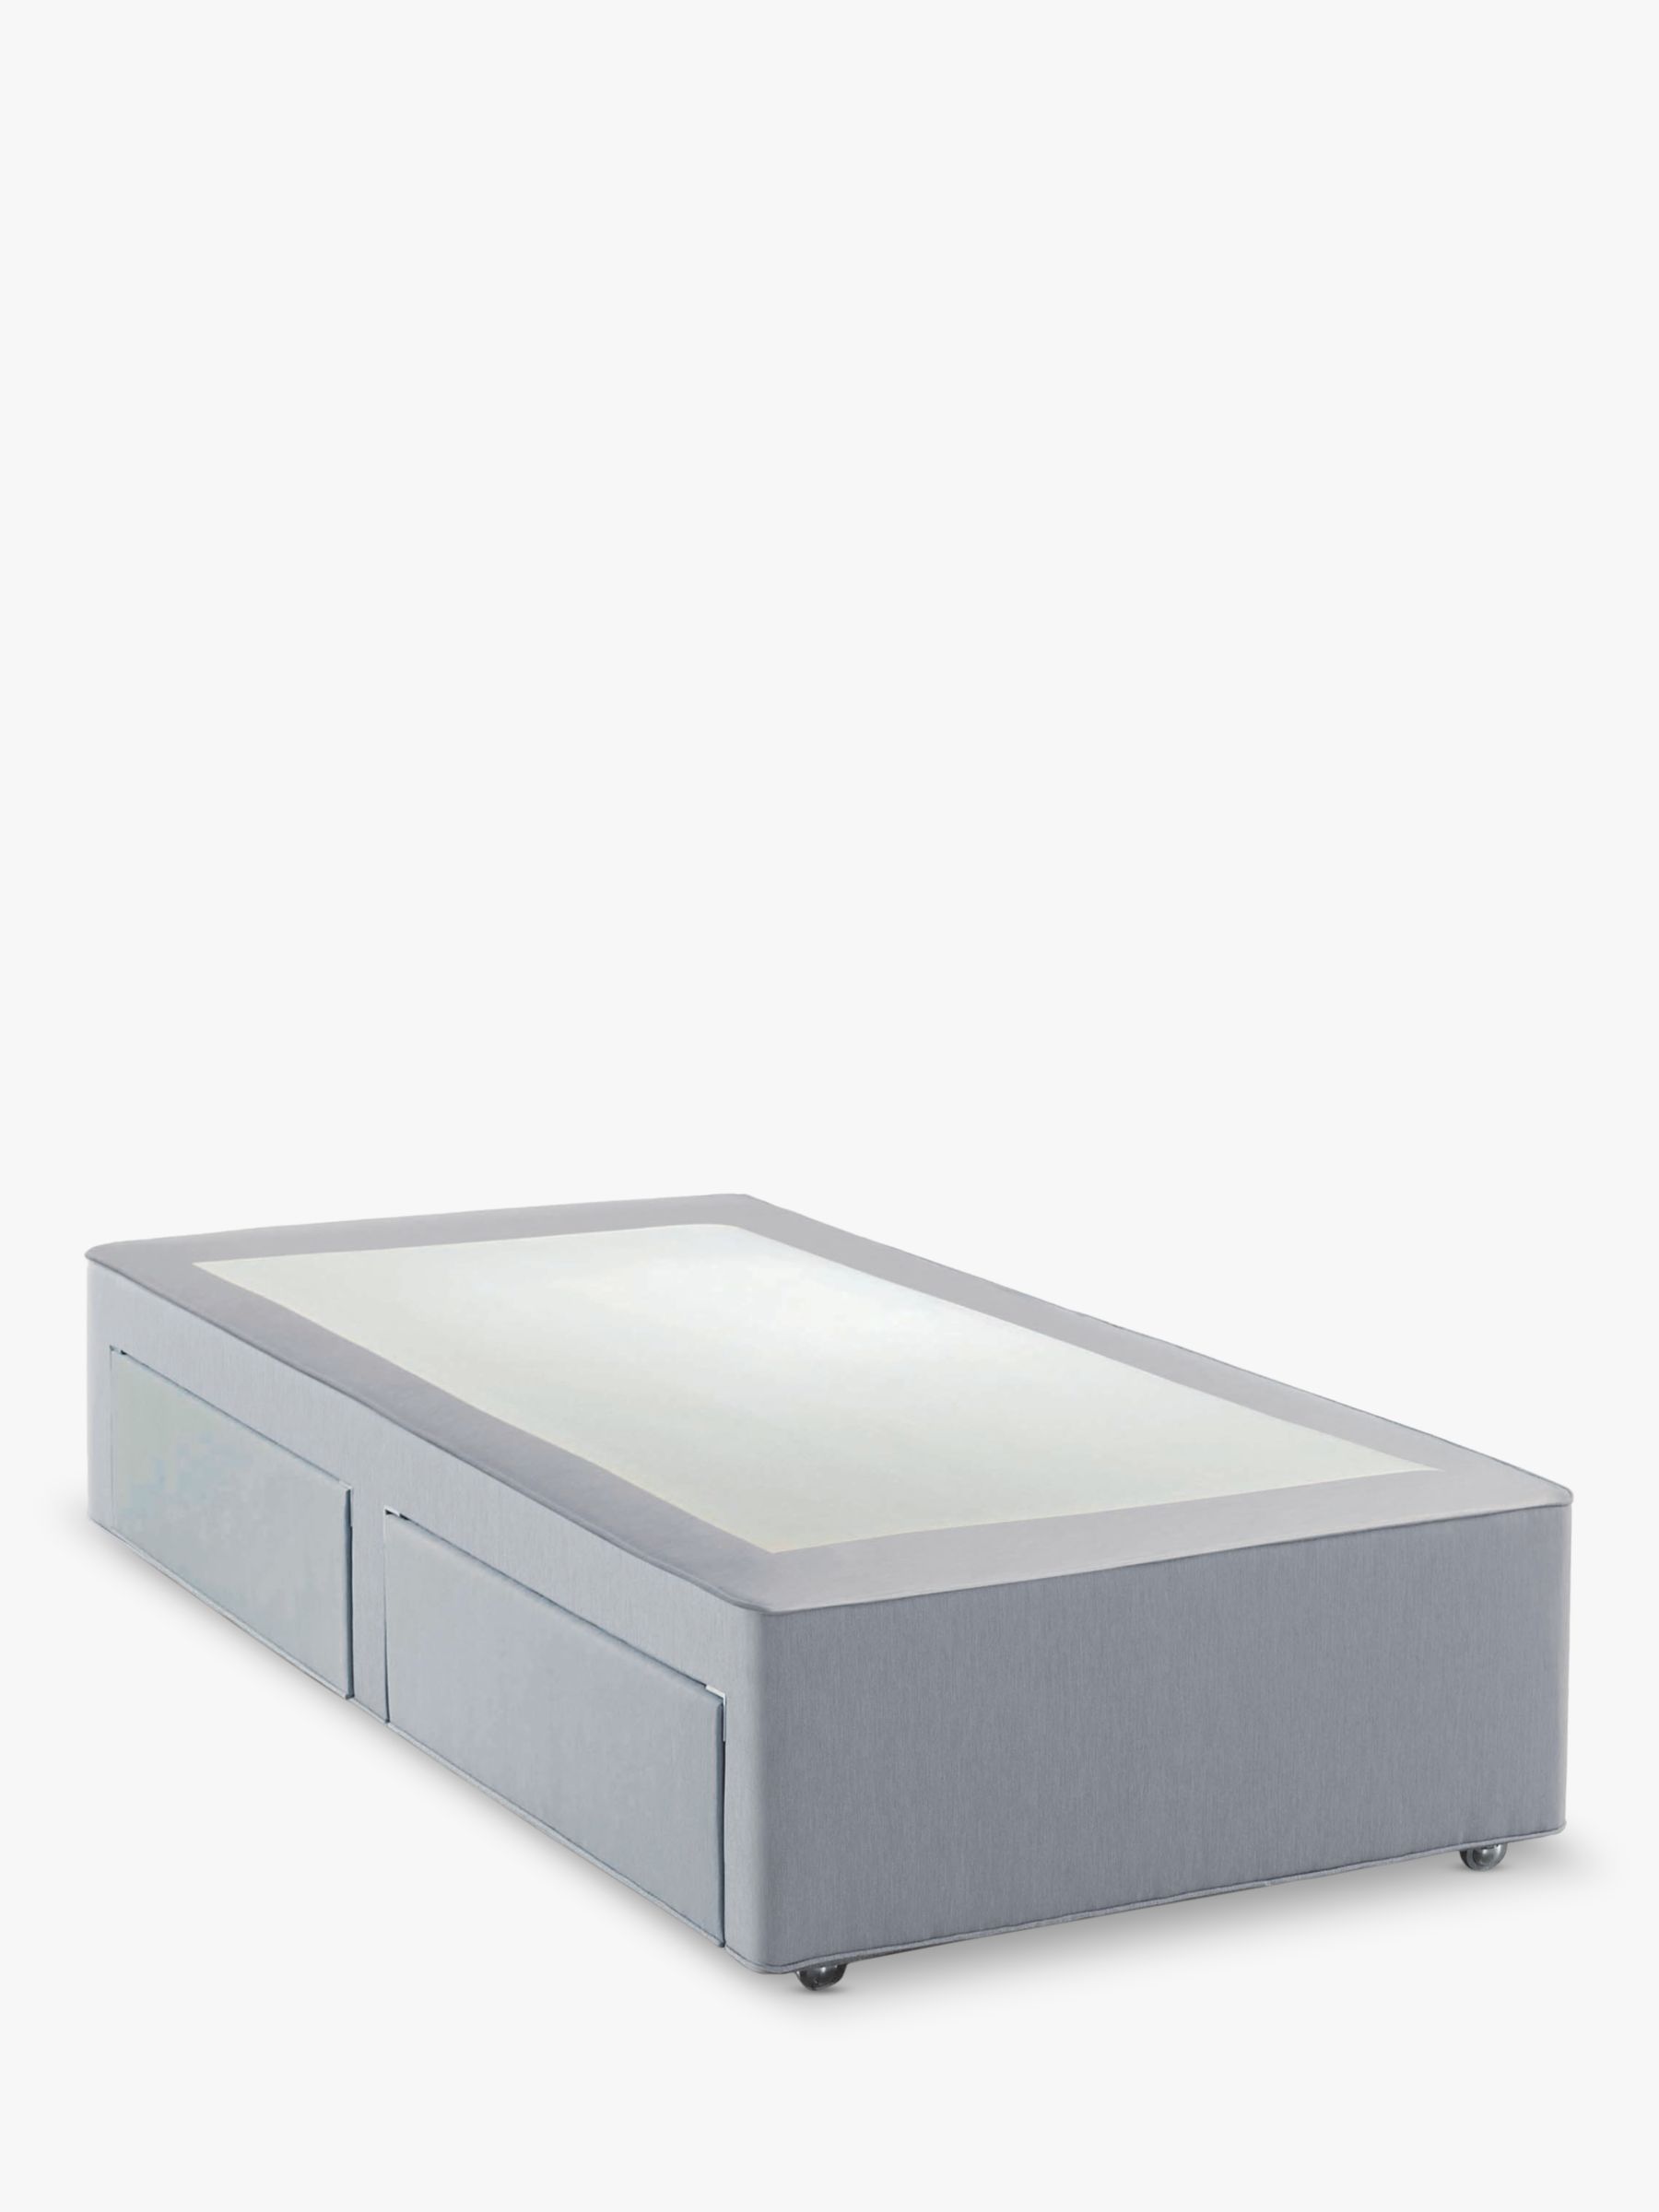 Photo of Hypnos firm edge 2 drawer divan storage bed single